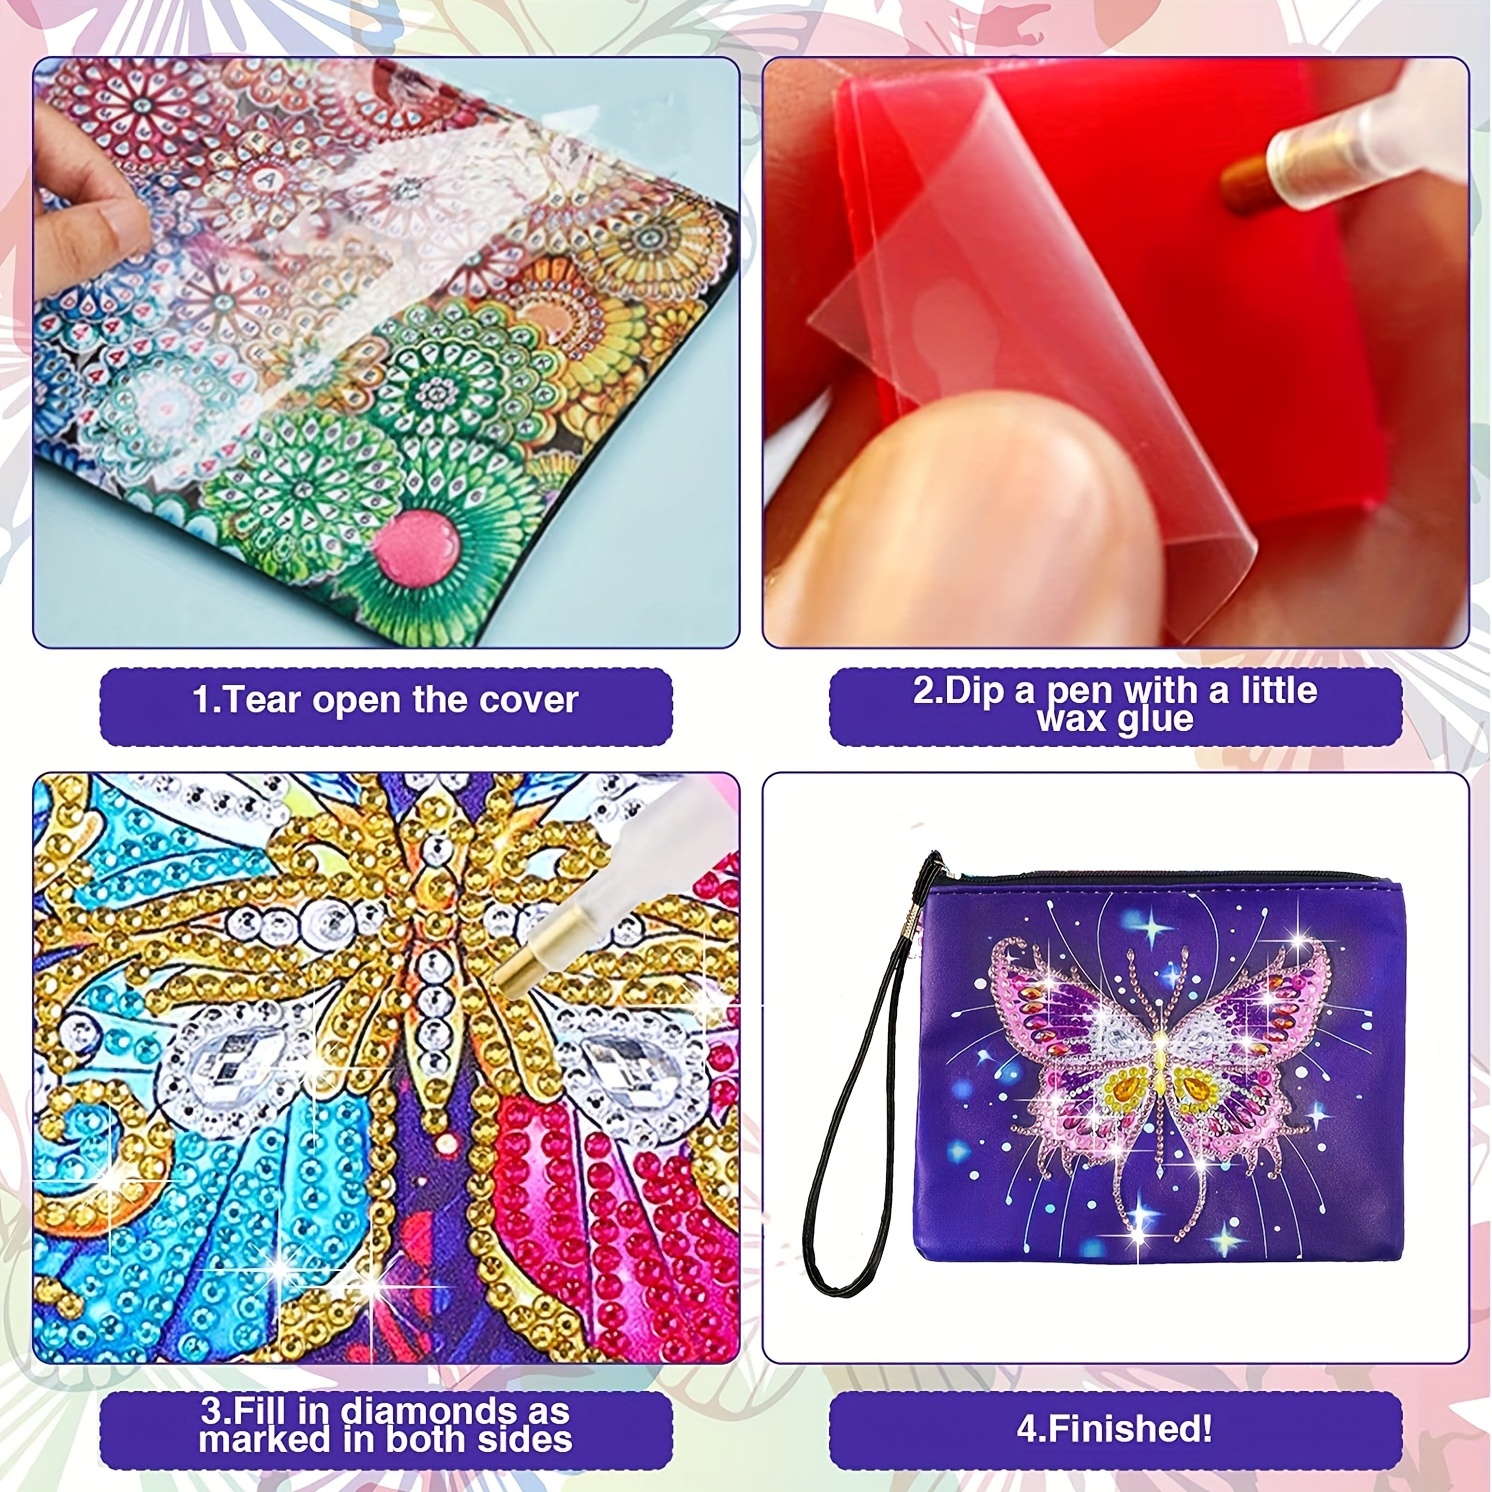 Diamond Painting Kits for Kids & Adult Cross-body Handbag with Chain 5D DIY Rhinestone Cross Stitch Arts Craft Makeup Shoulder Bag Zipper for